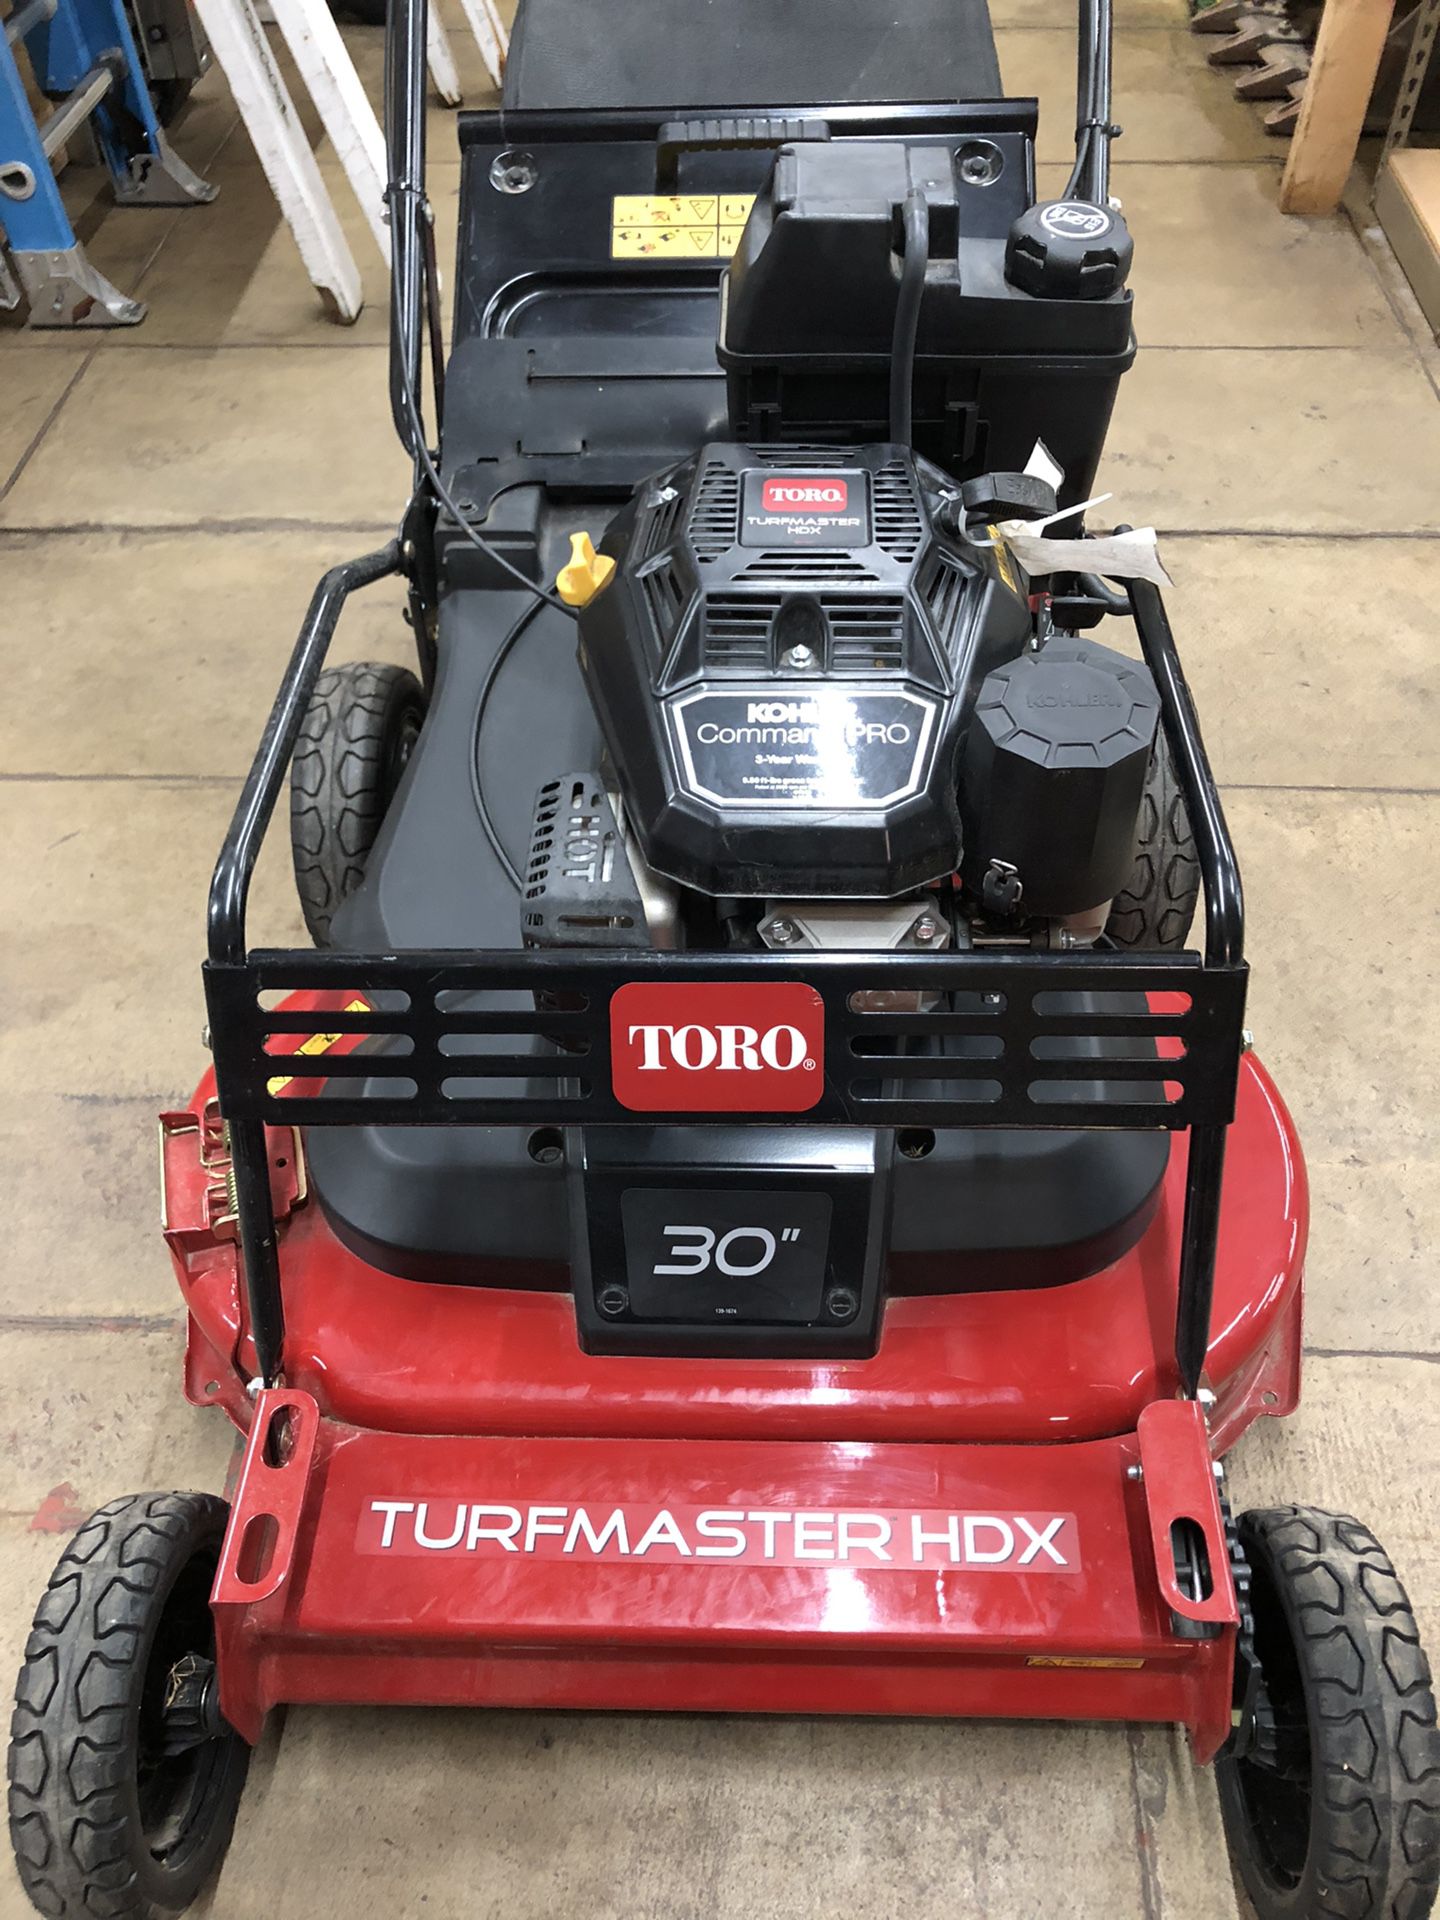 Toro Turfmaster HDX